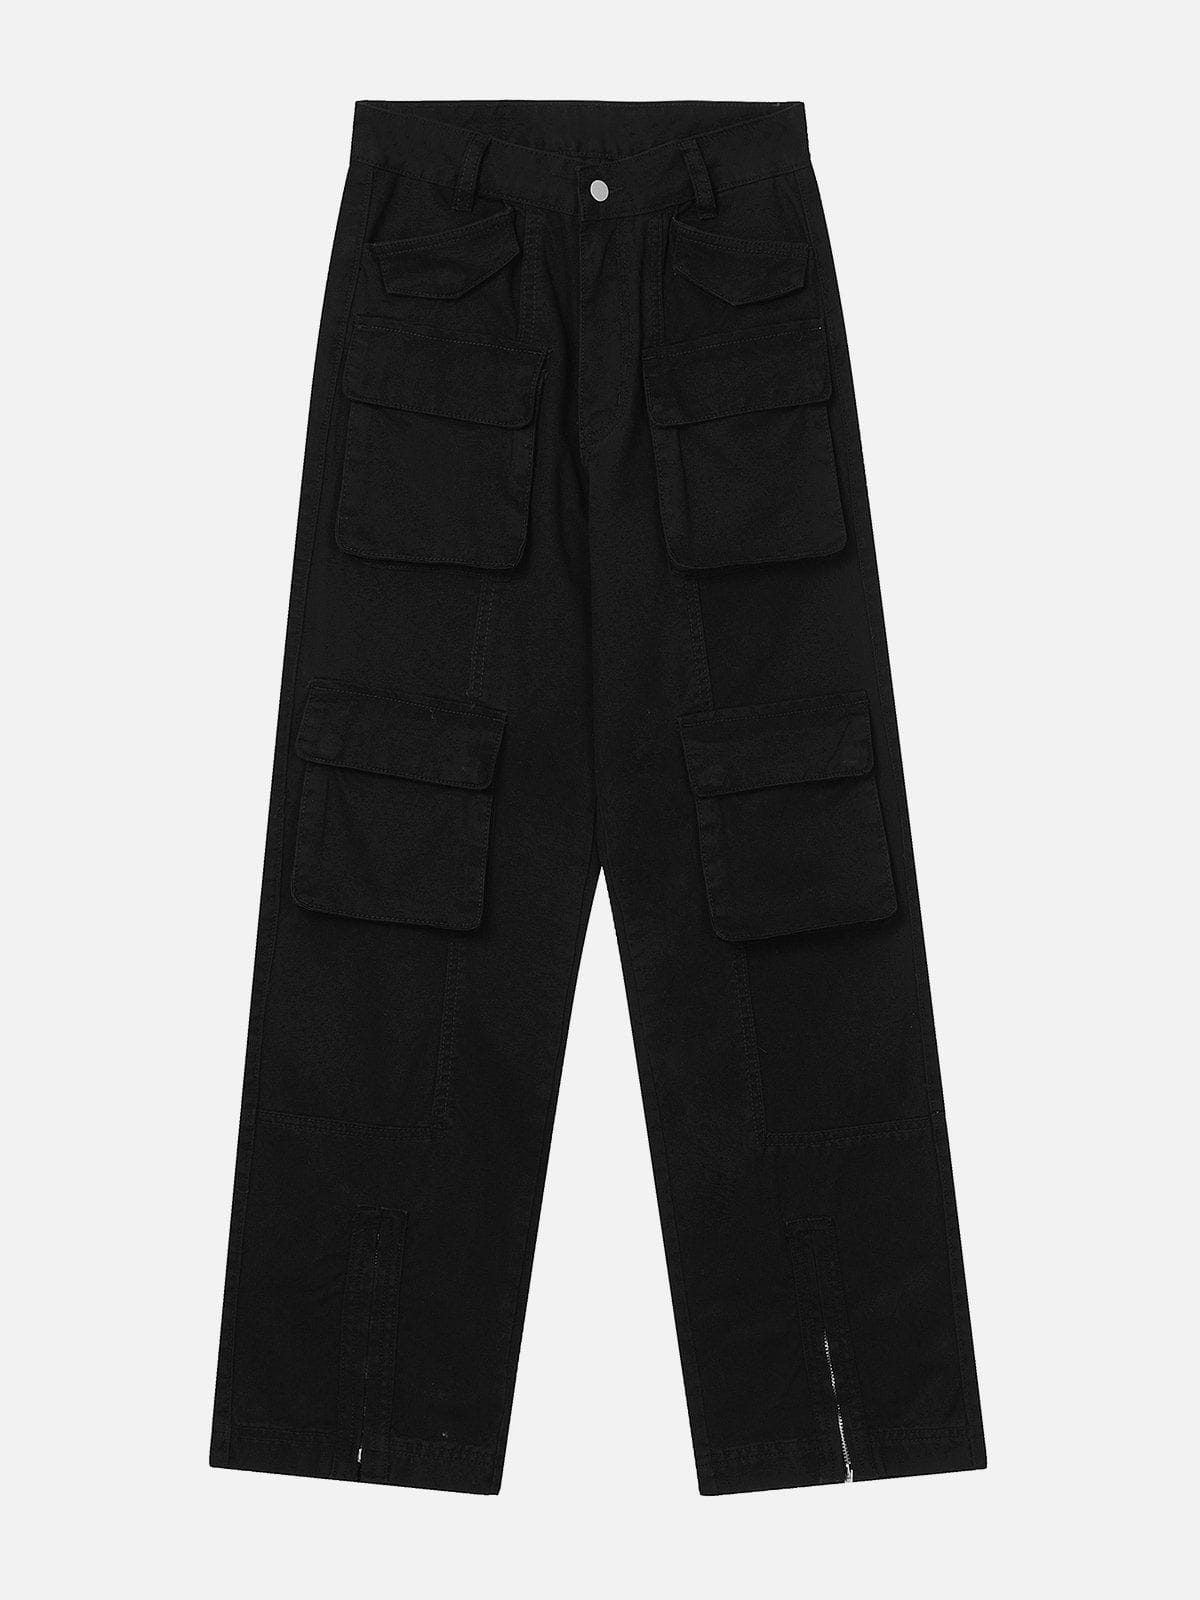 Sneakerland® - Pocket Patchwork Cargo Pants